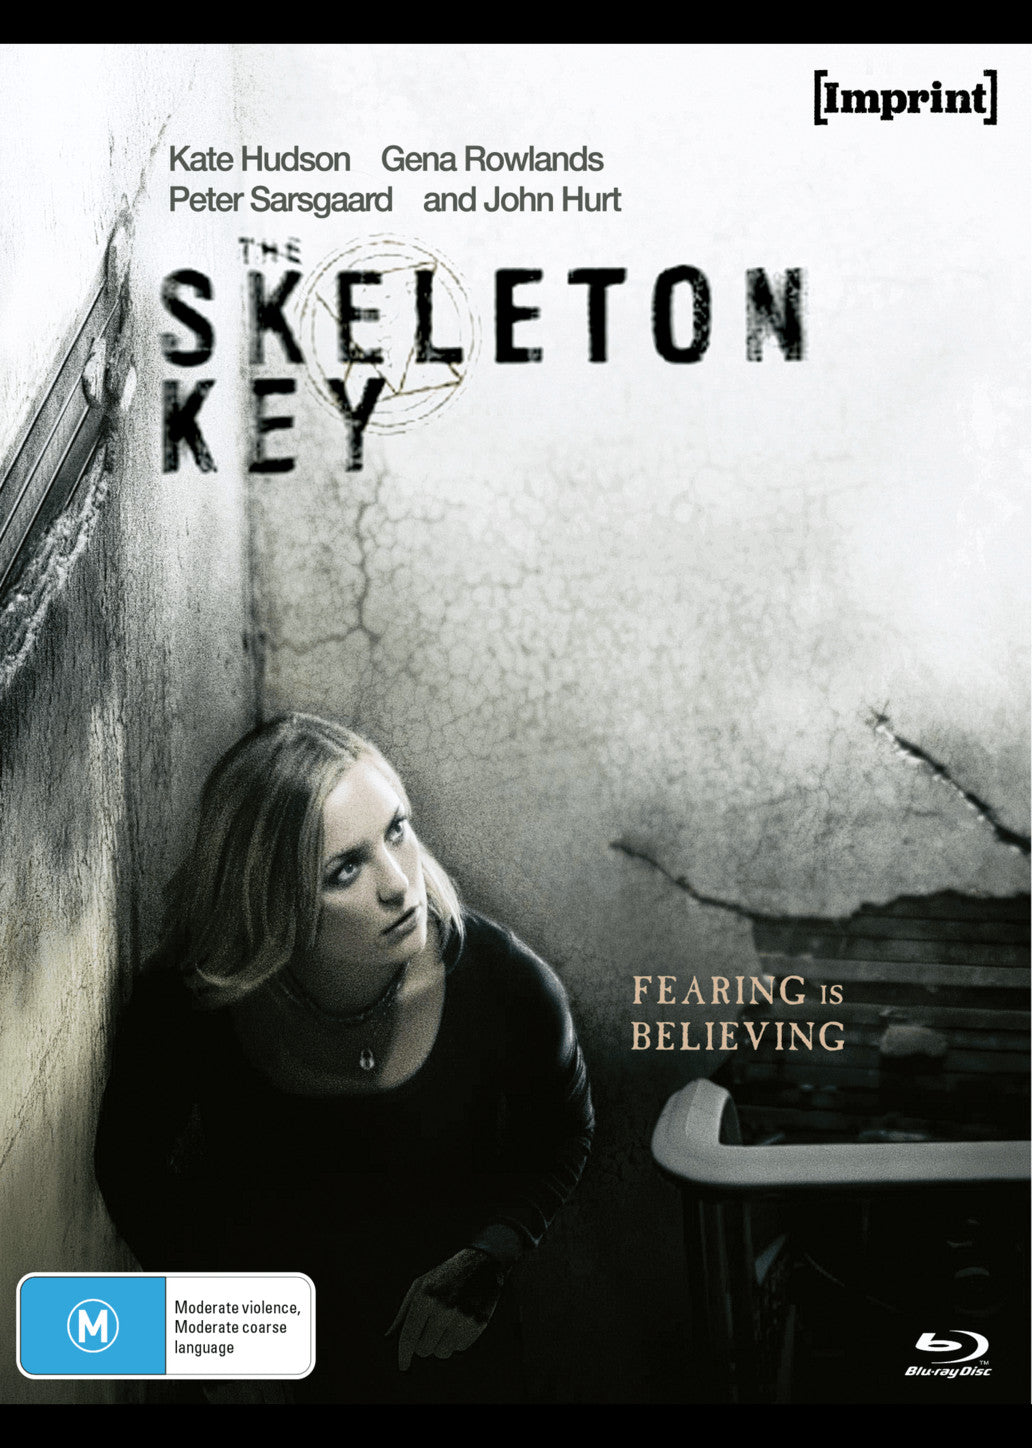 THE SKELETON KEY (IMPRINT COLLECTION #259)